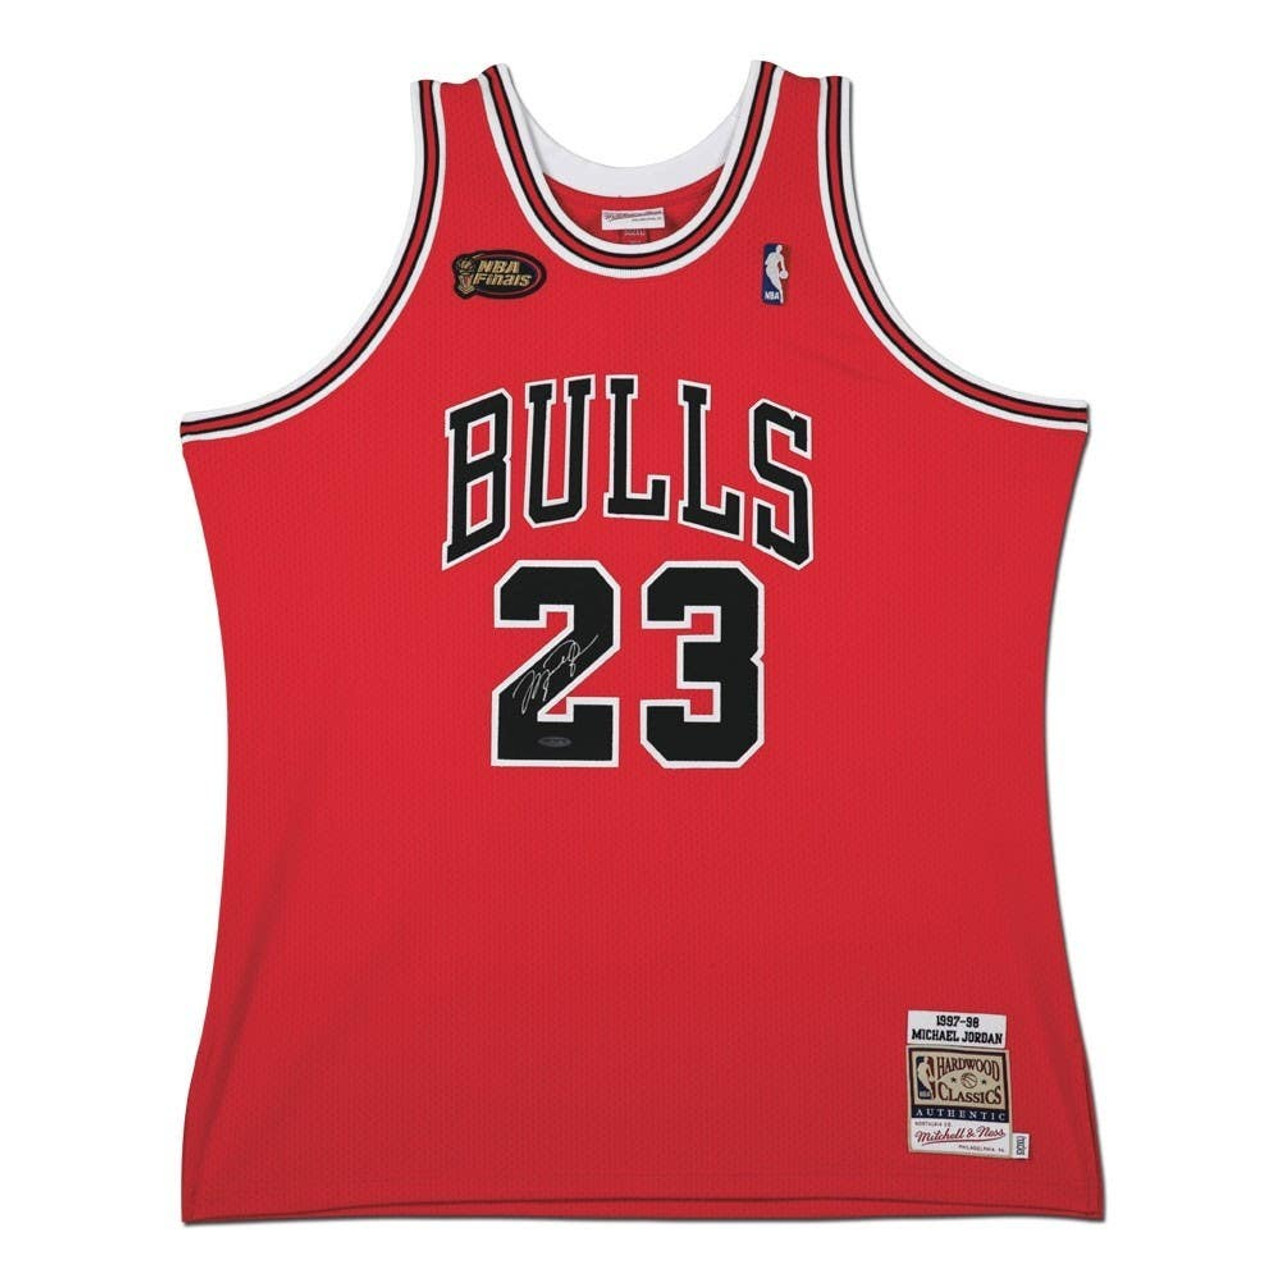 Bulls 23 Shirt 